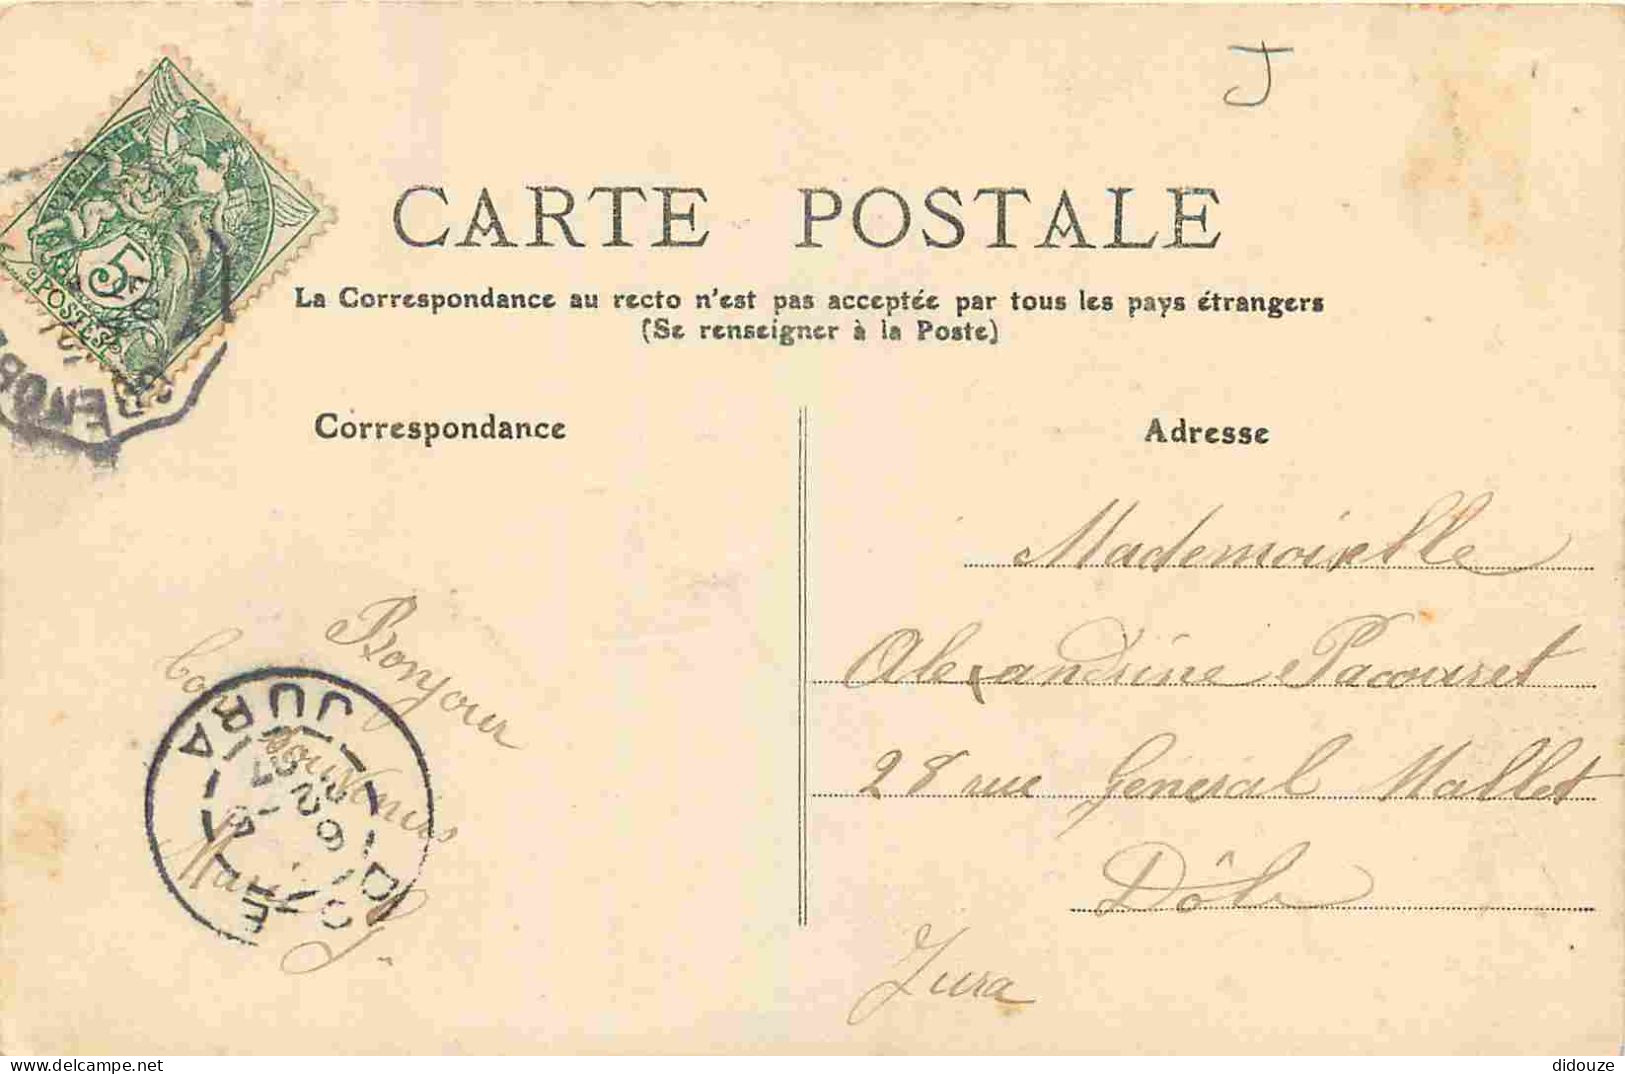 38 - Bourgoin - Vue Générale - CPA - Oblitération Ronde De 1907 - Voir Scans Recto-Verso - Bourgoin